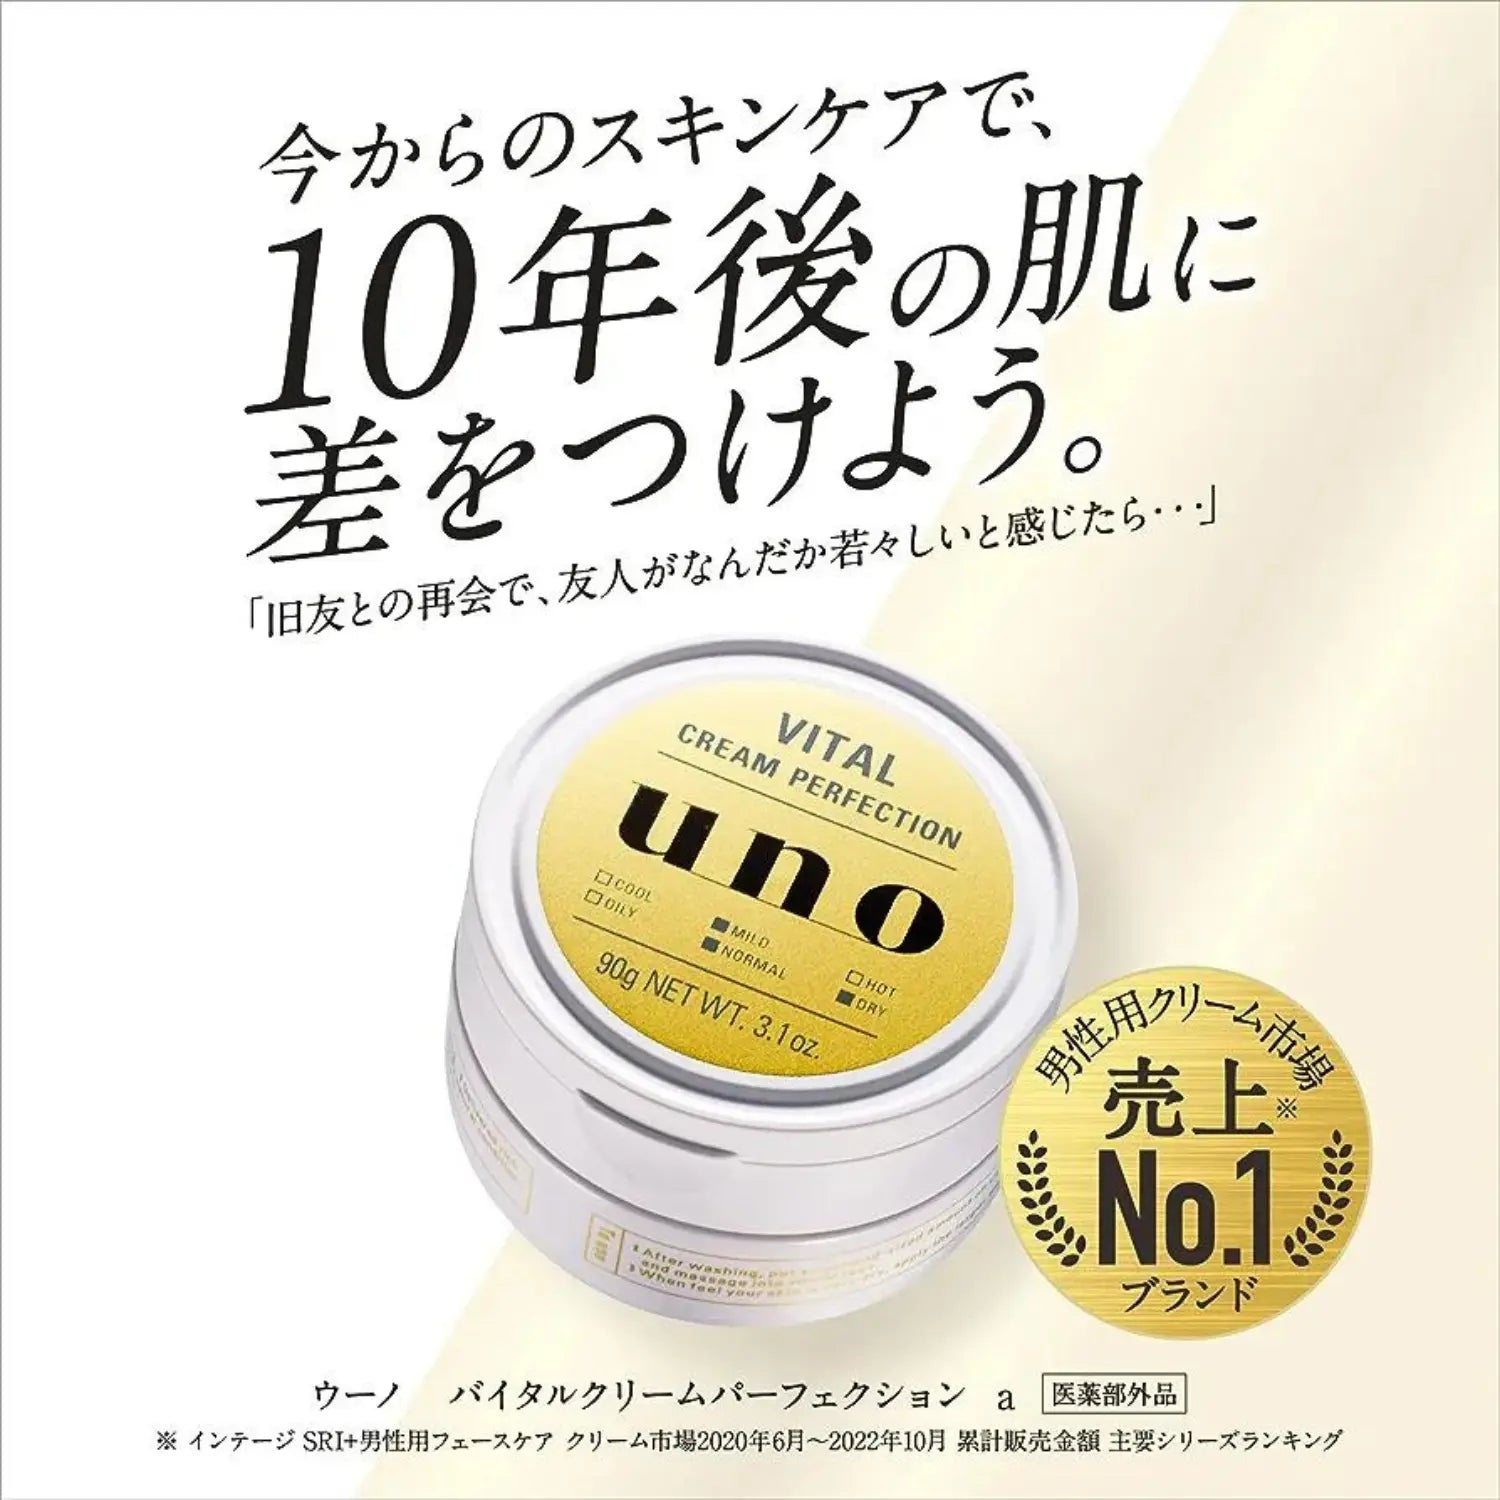 Shiseido Uno for Men Vital Cream Perfection 90g - Buy Me Japan